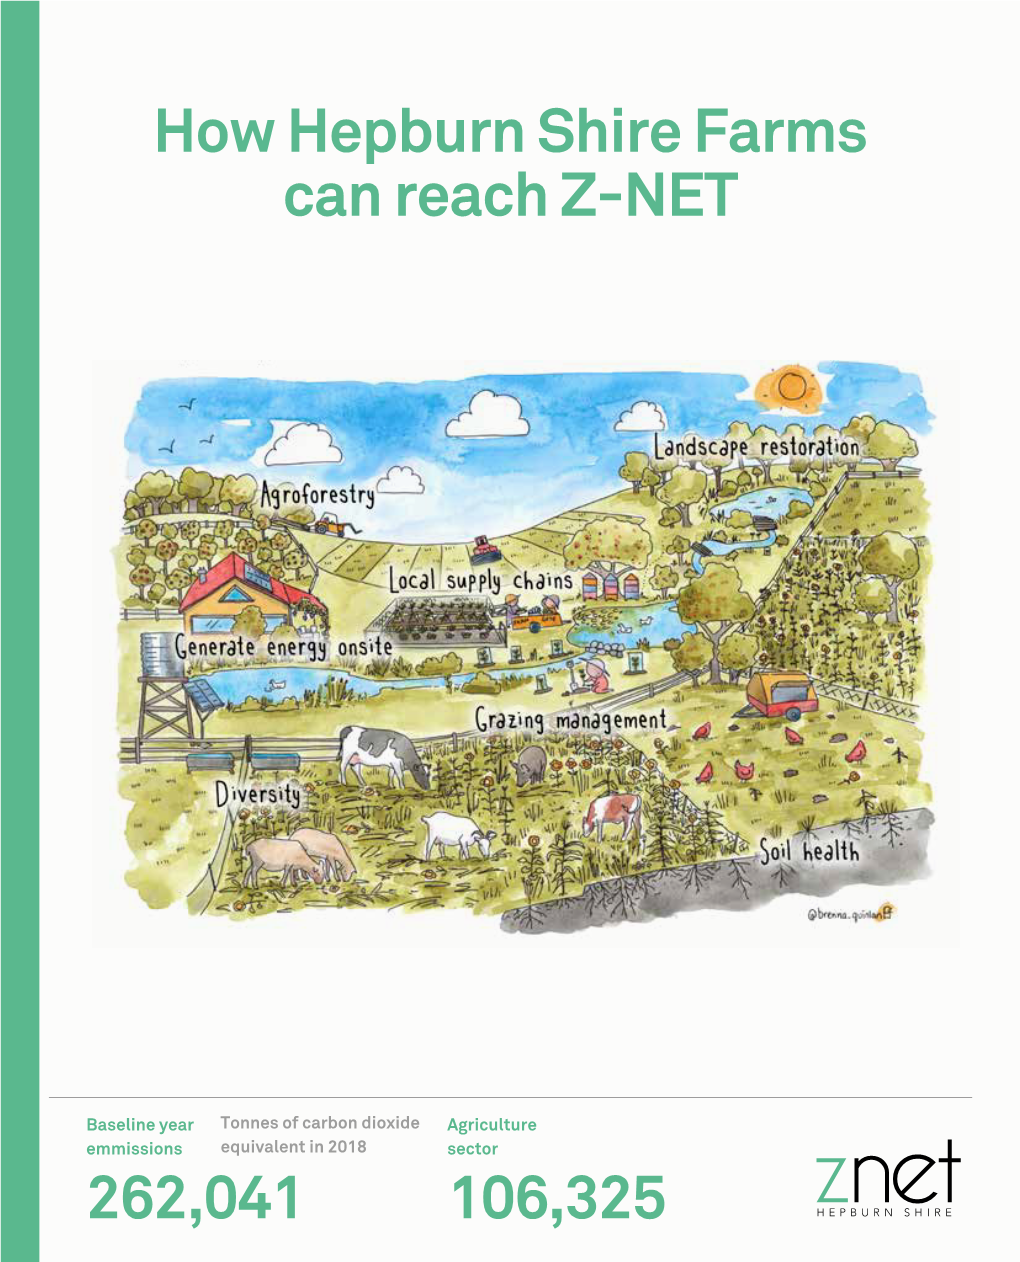 How Hepburn Shire Farms Can Reach Z-NET